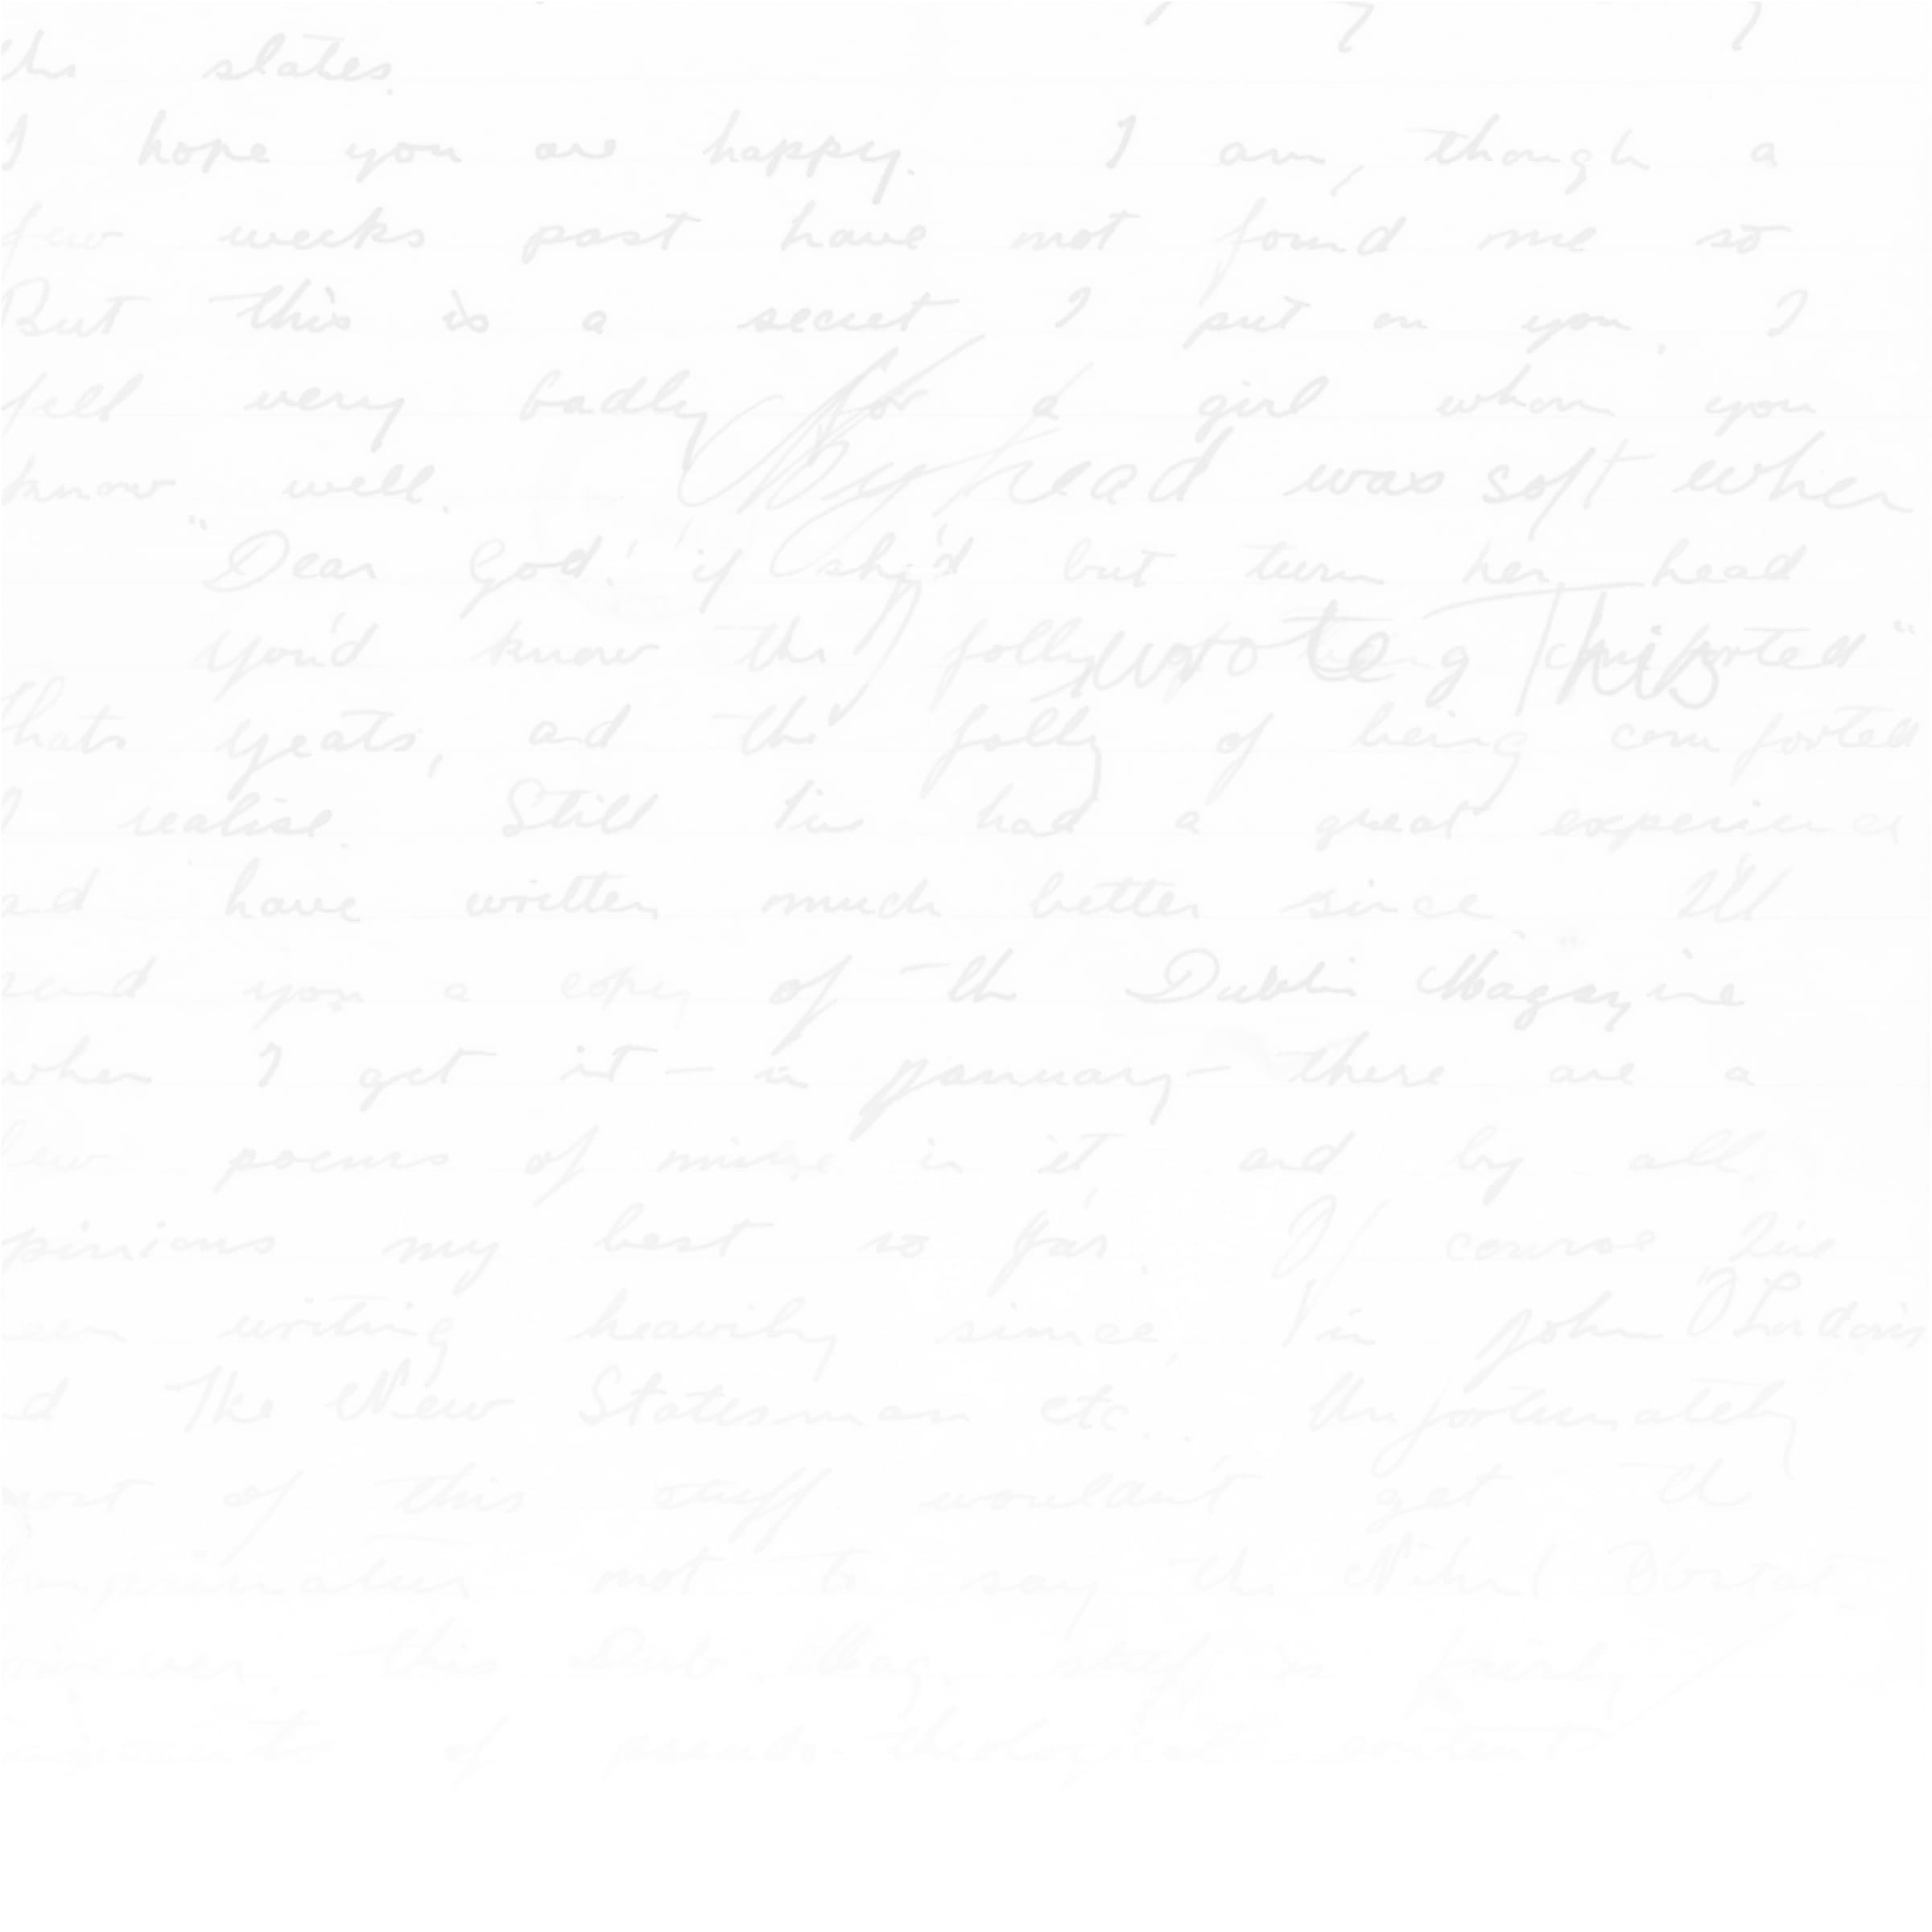 kavanagh-bg-handwritten_web-1669994455.jpg